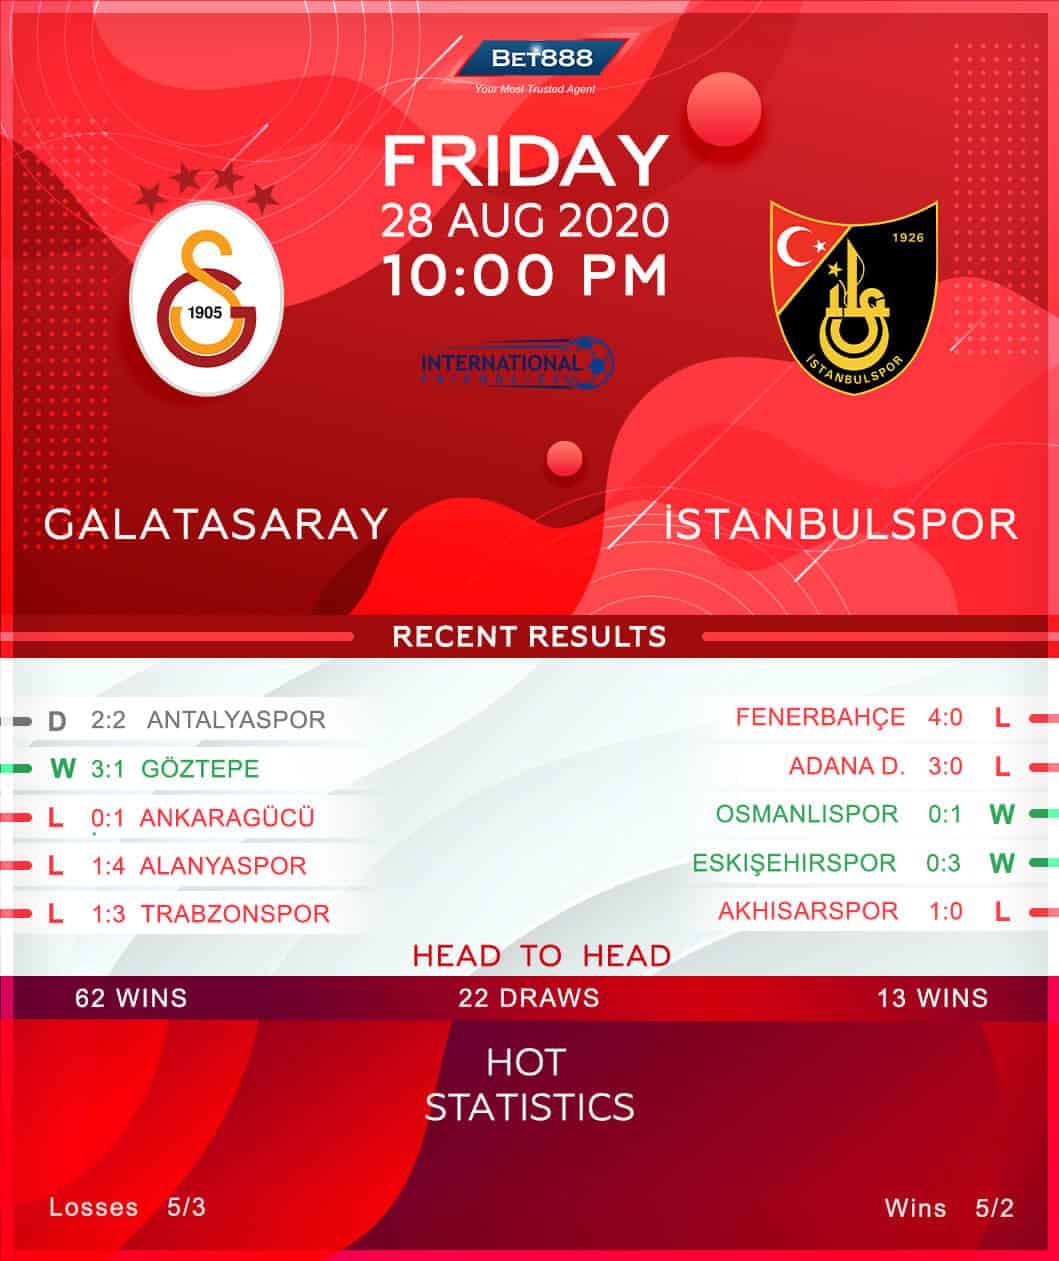 Galatasaray vs Istanbulspor﻿ 28/08/20